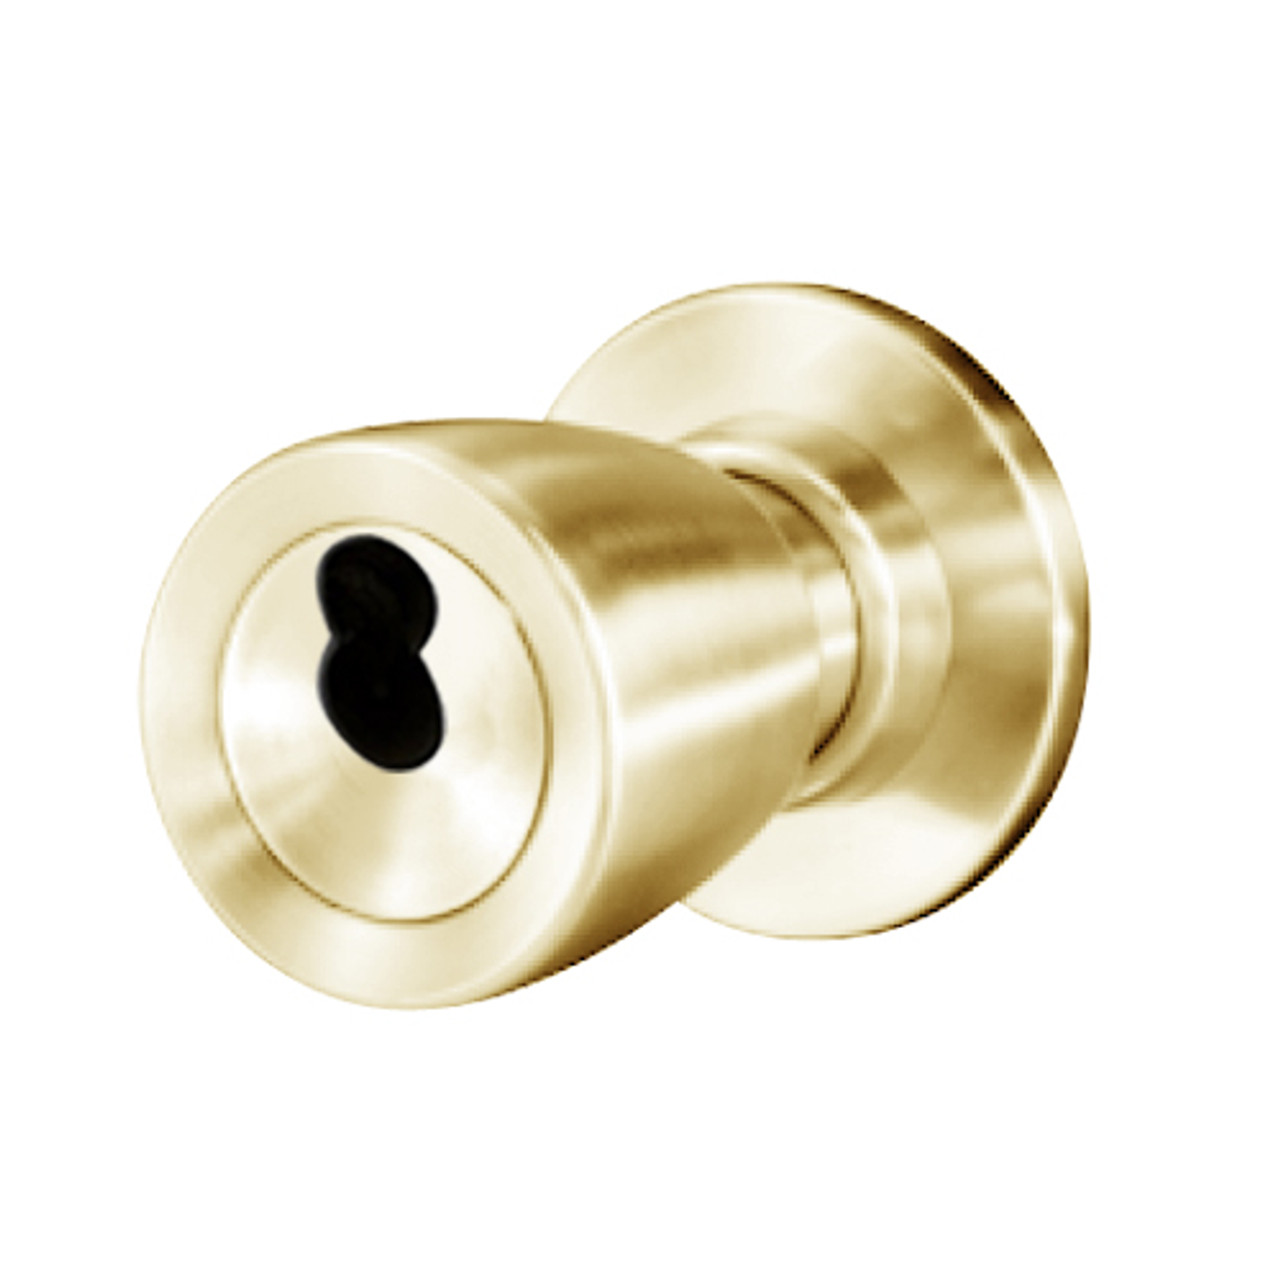 8K37YR6CS3606 Best 8K Series Exit Heavy Duty Cylindrical Knob Locks with Tulip Style in Satin Brass